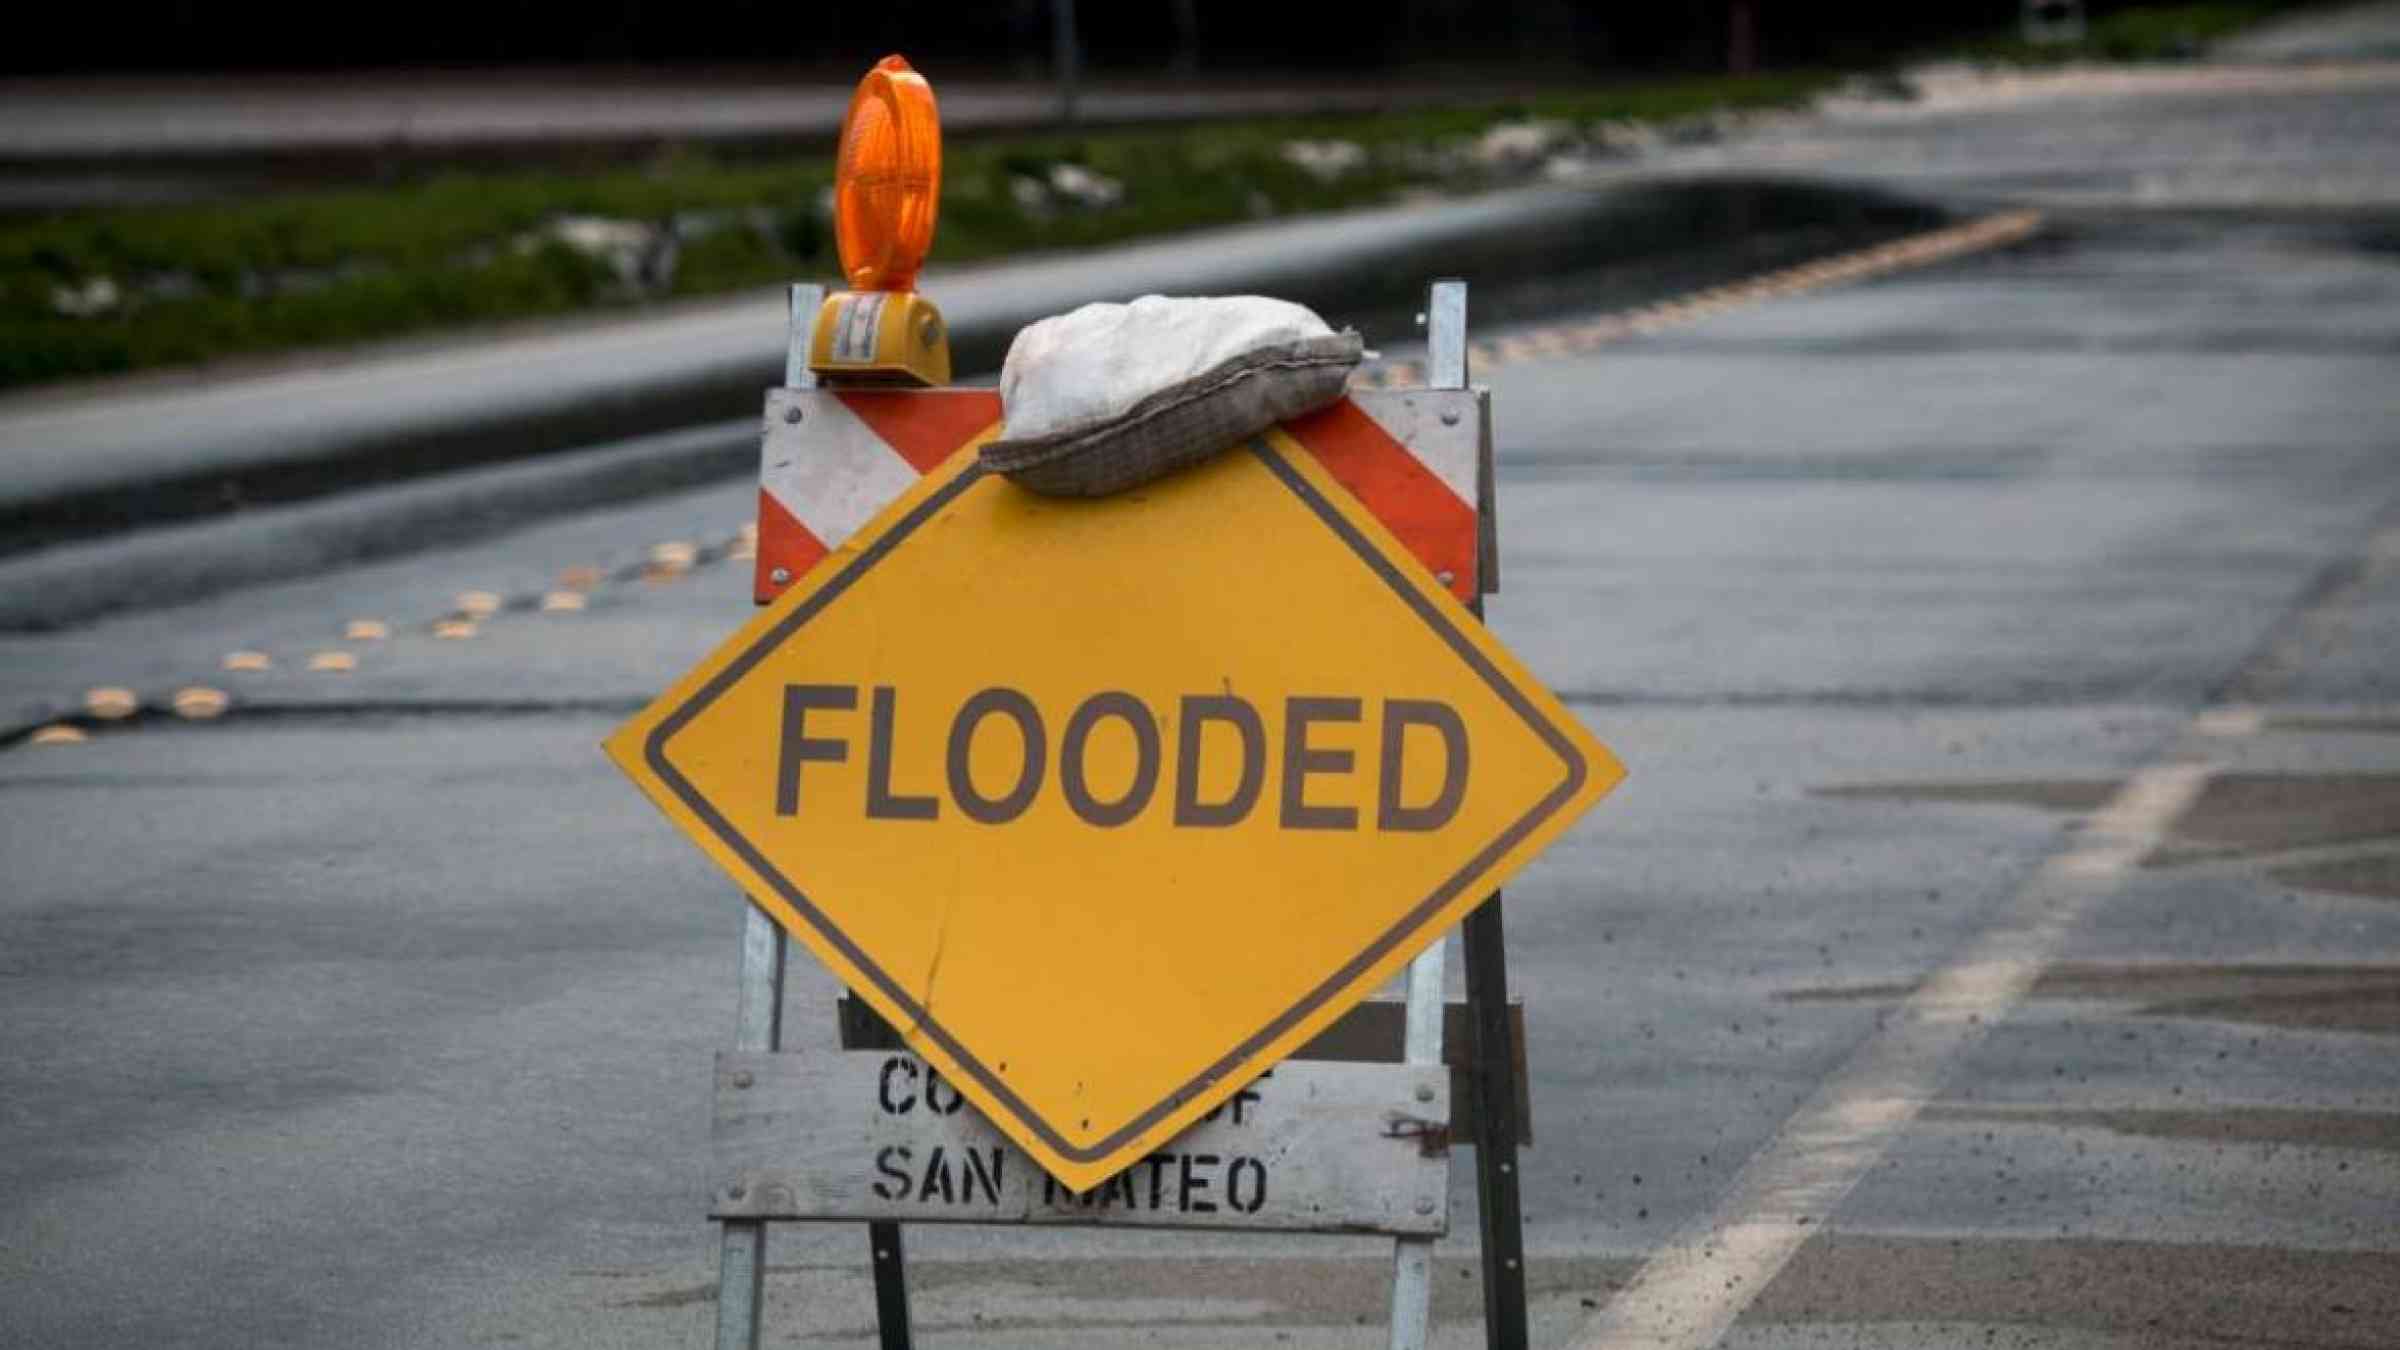 Flooded road sign in Pescadero, San Mateo County, California. Shutterstock.com